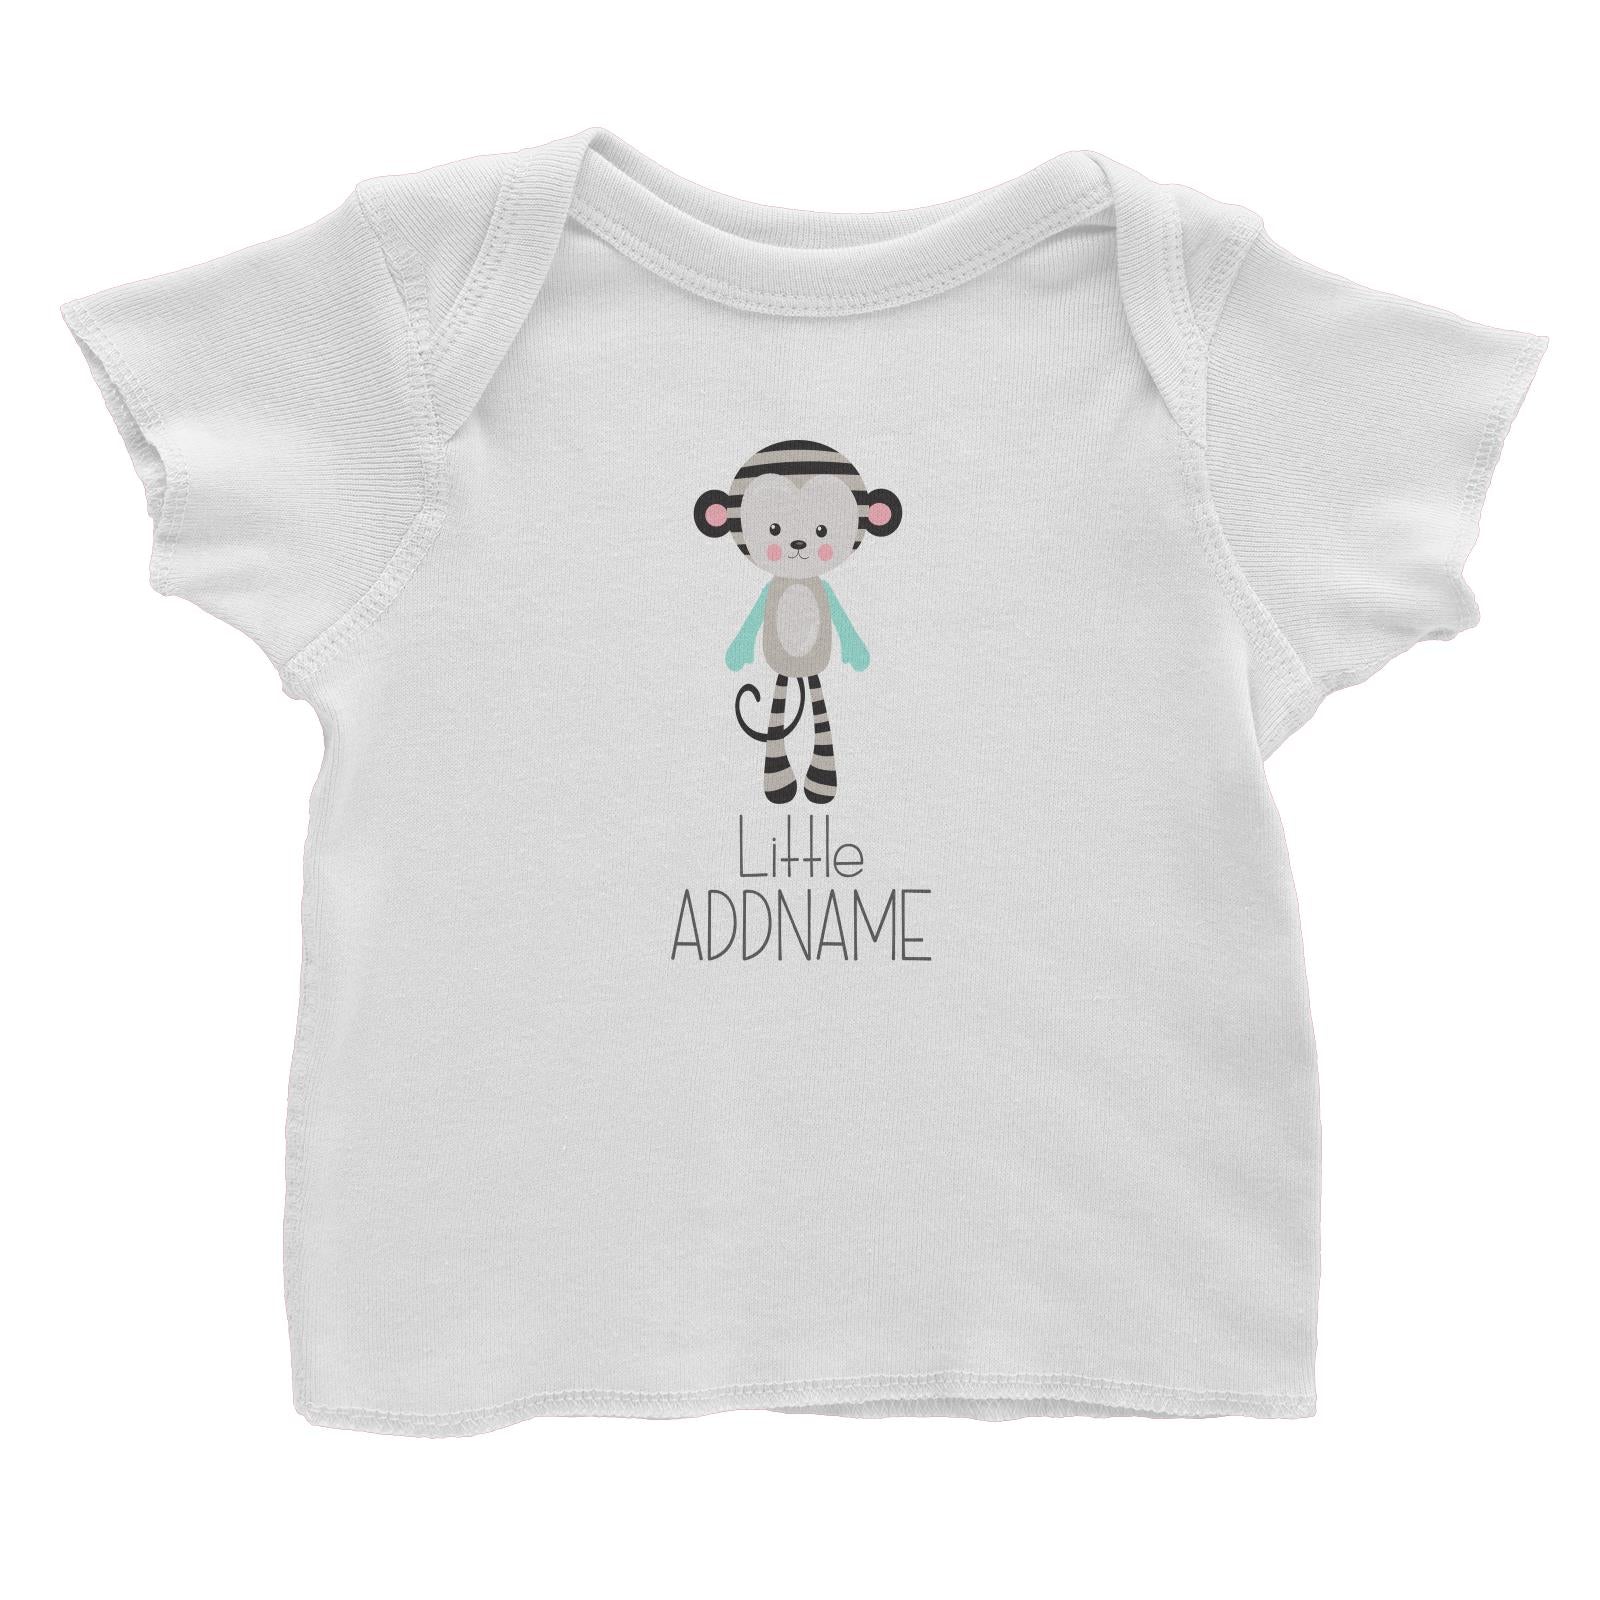 Nursery Animals Little Monkey Addname Baby T-Shirt